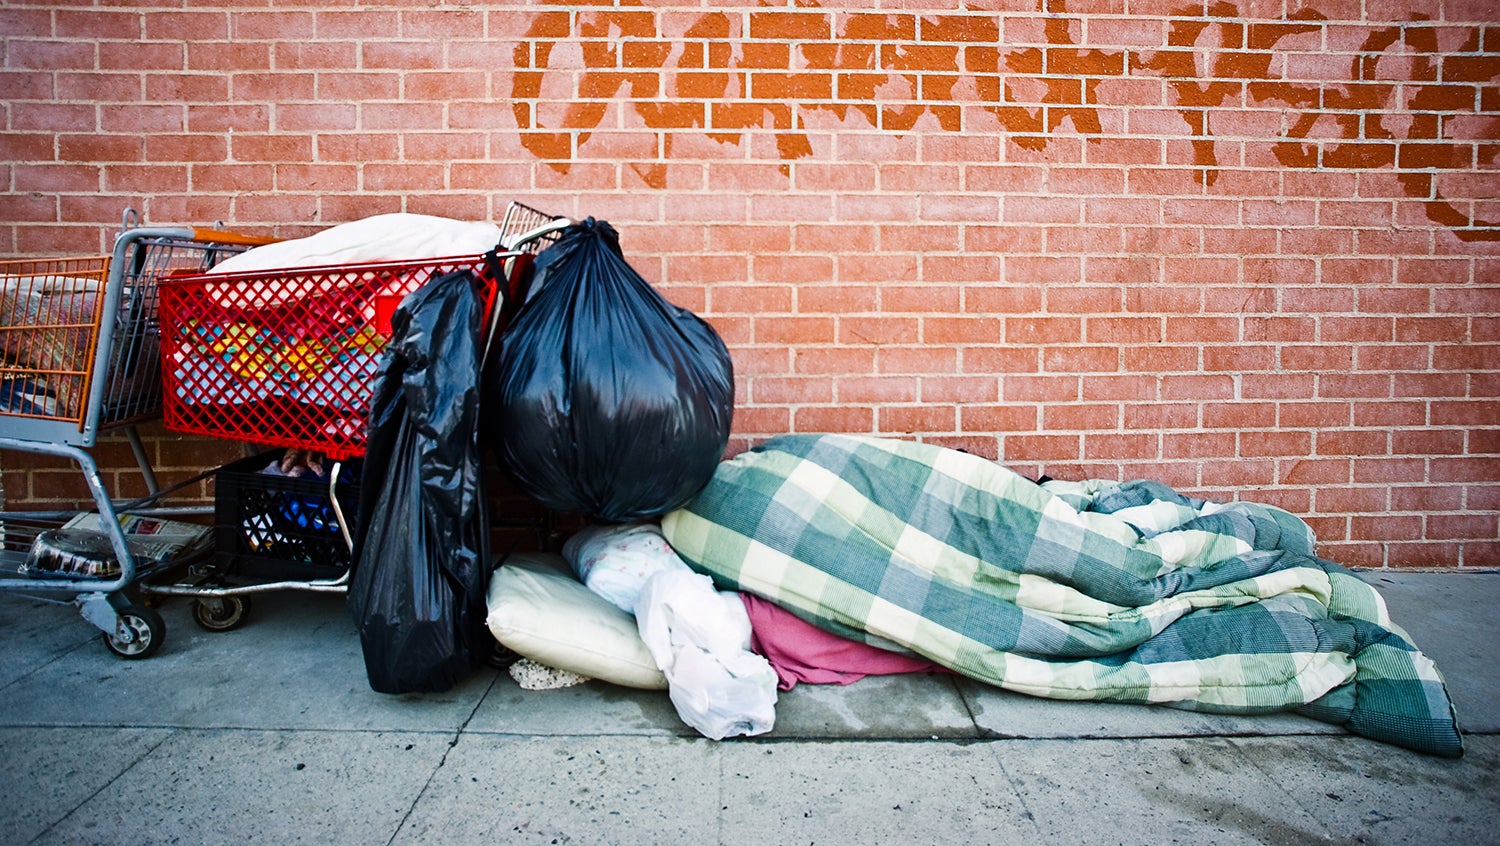 homeless person's belongings and bedding on street sidewalk